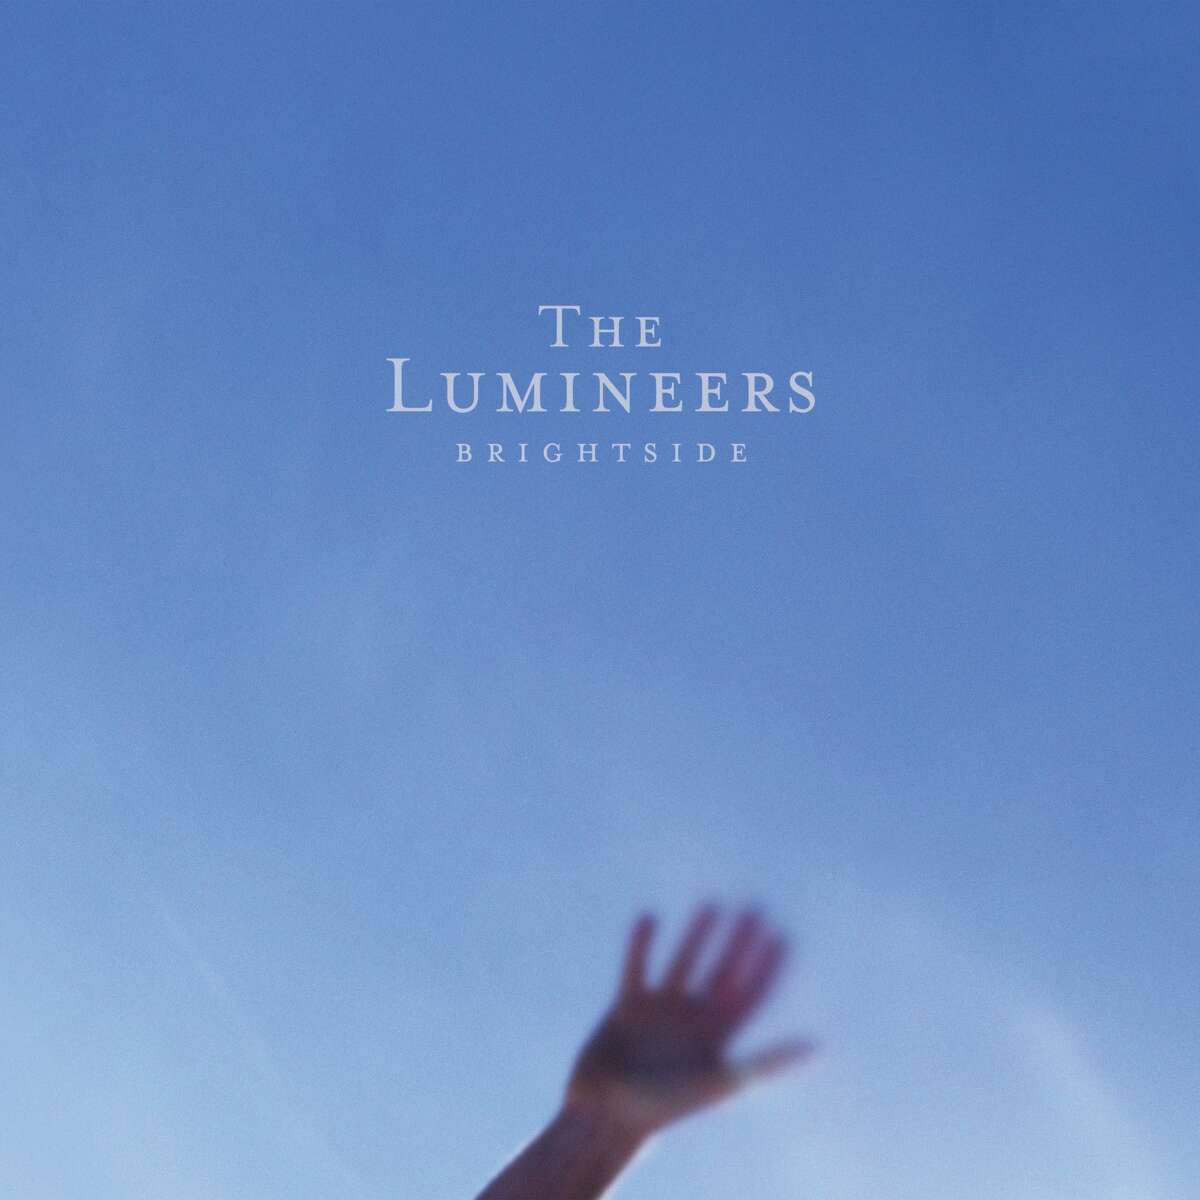 Lumineers announce new album recorded in Catskills